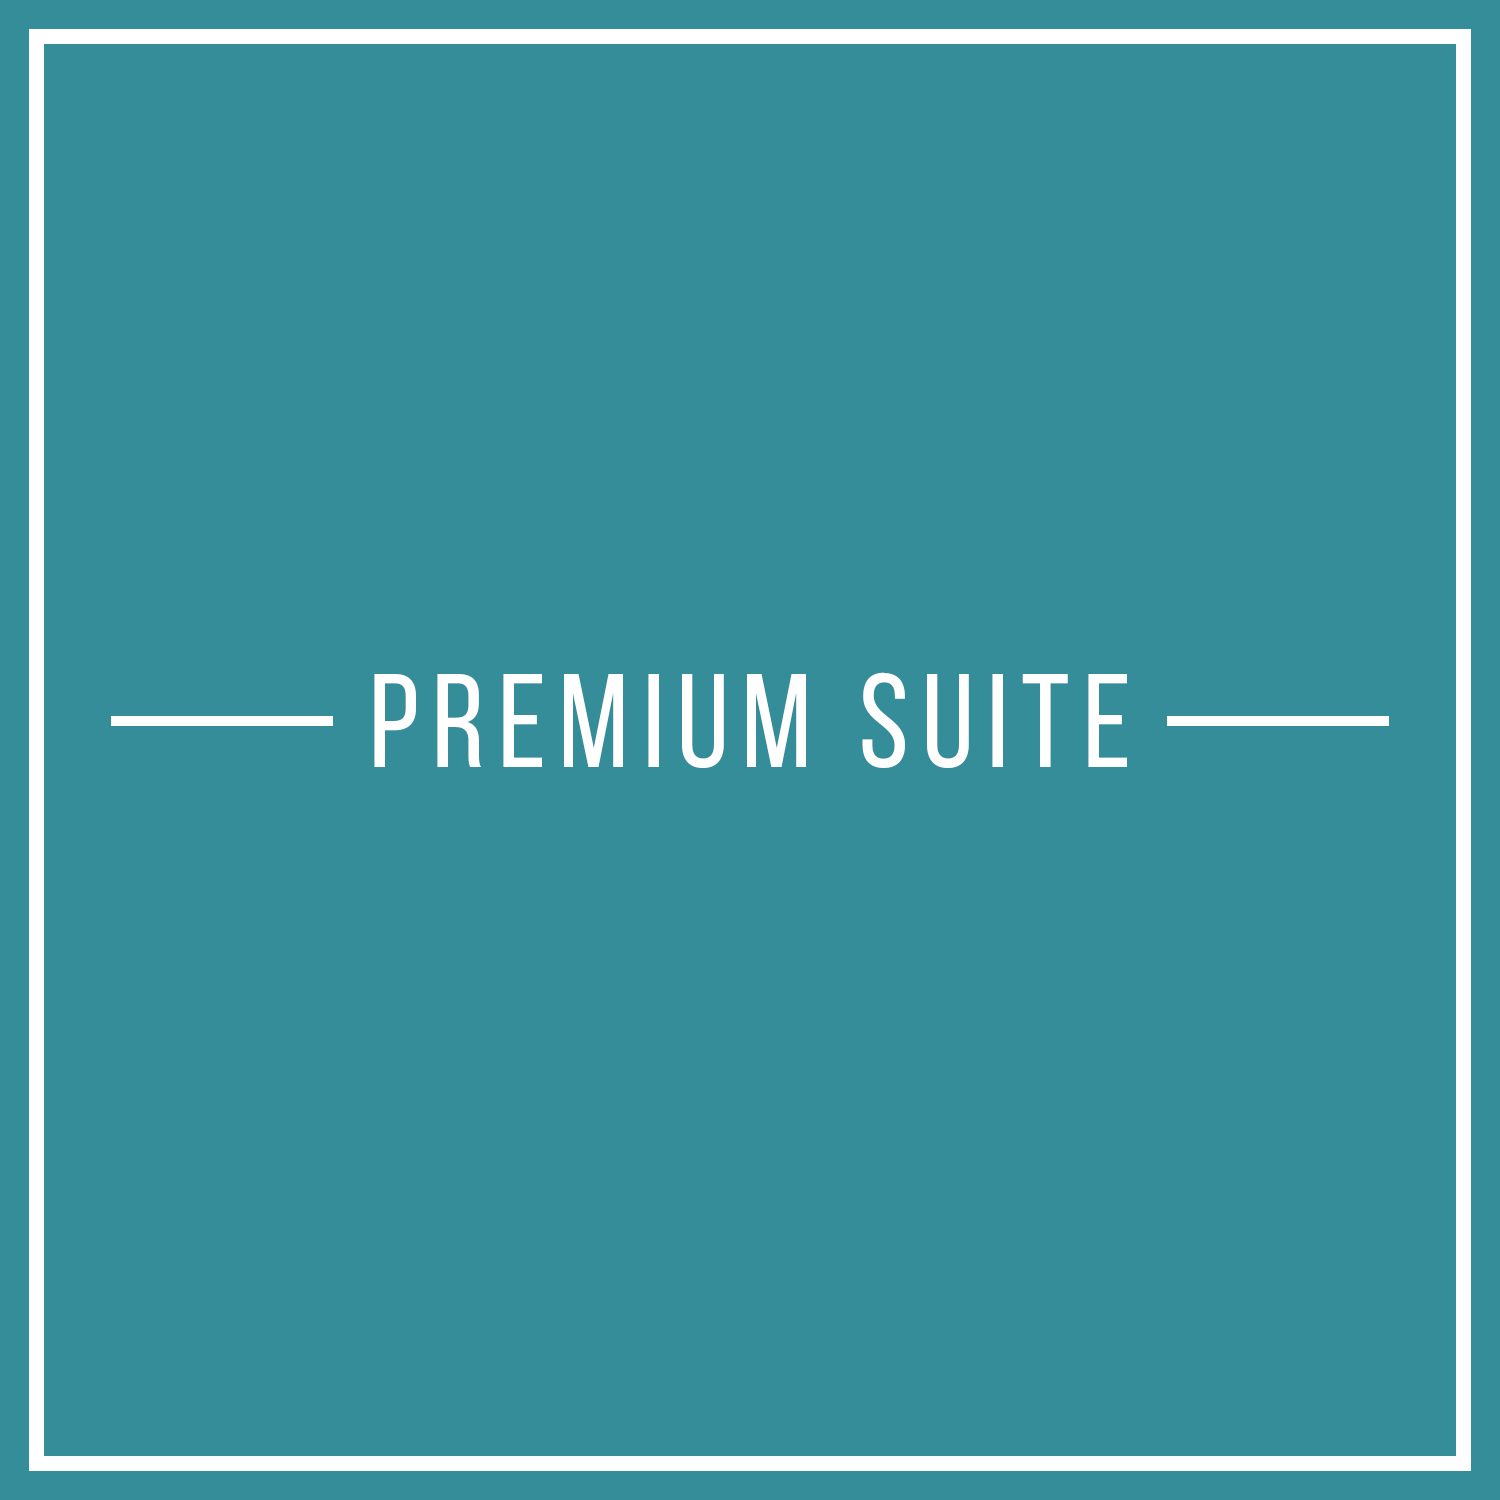 aya-kapadokya-room-features-divan-suite-square-premium-suite